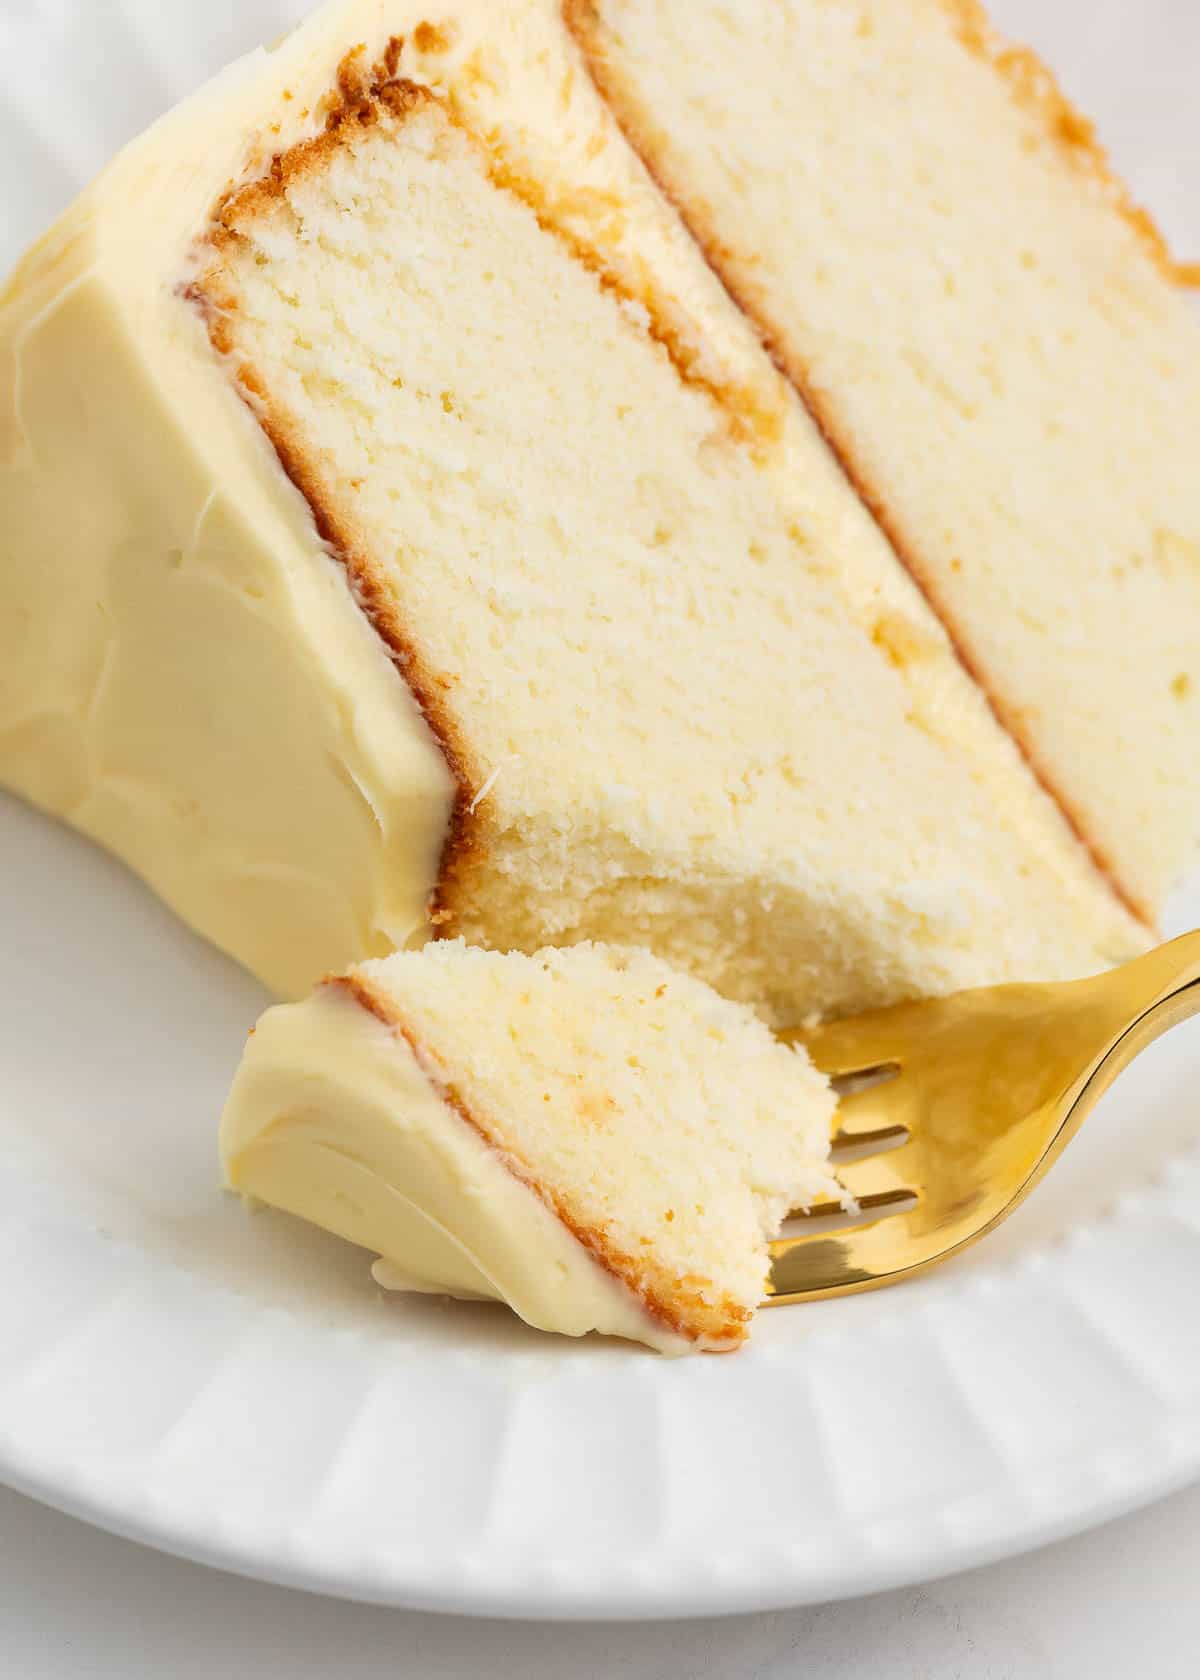 Slice of vanilla cake with bite taken.